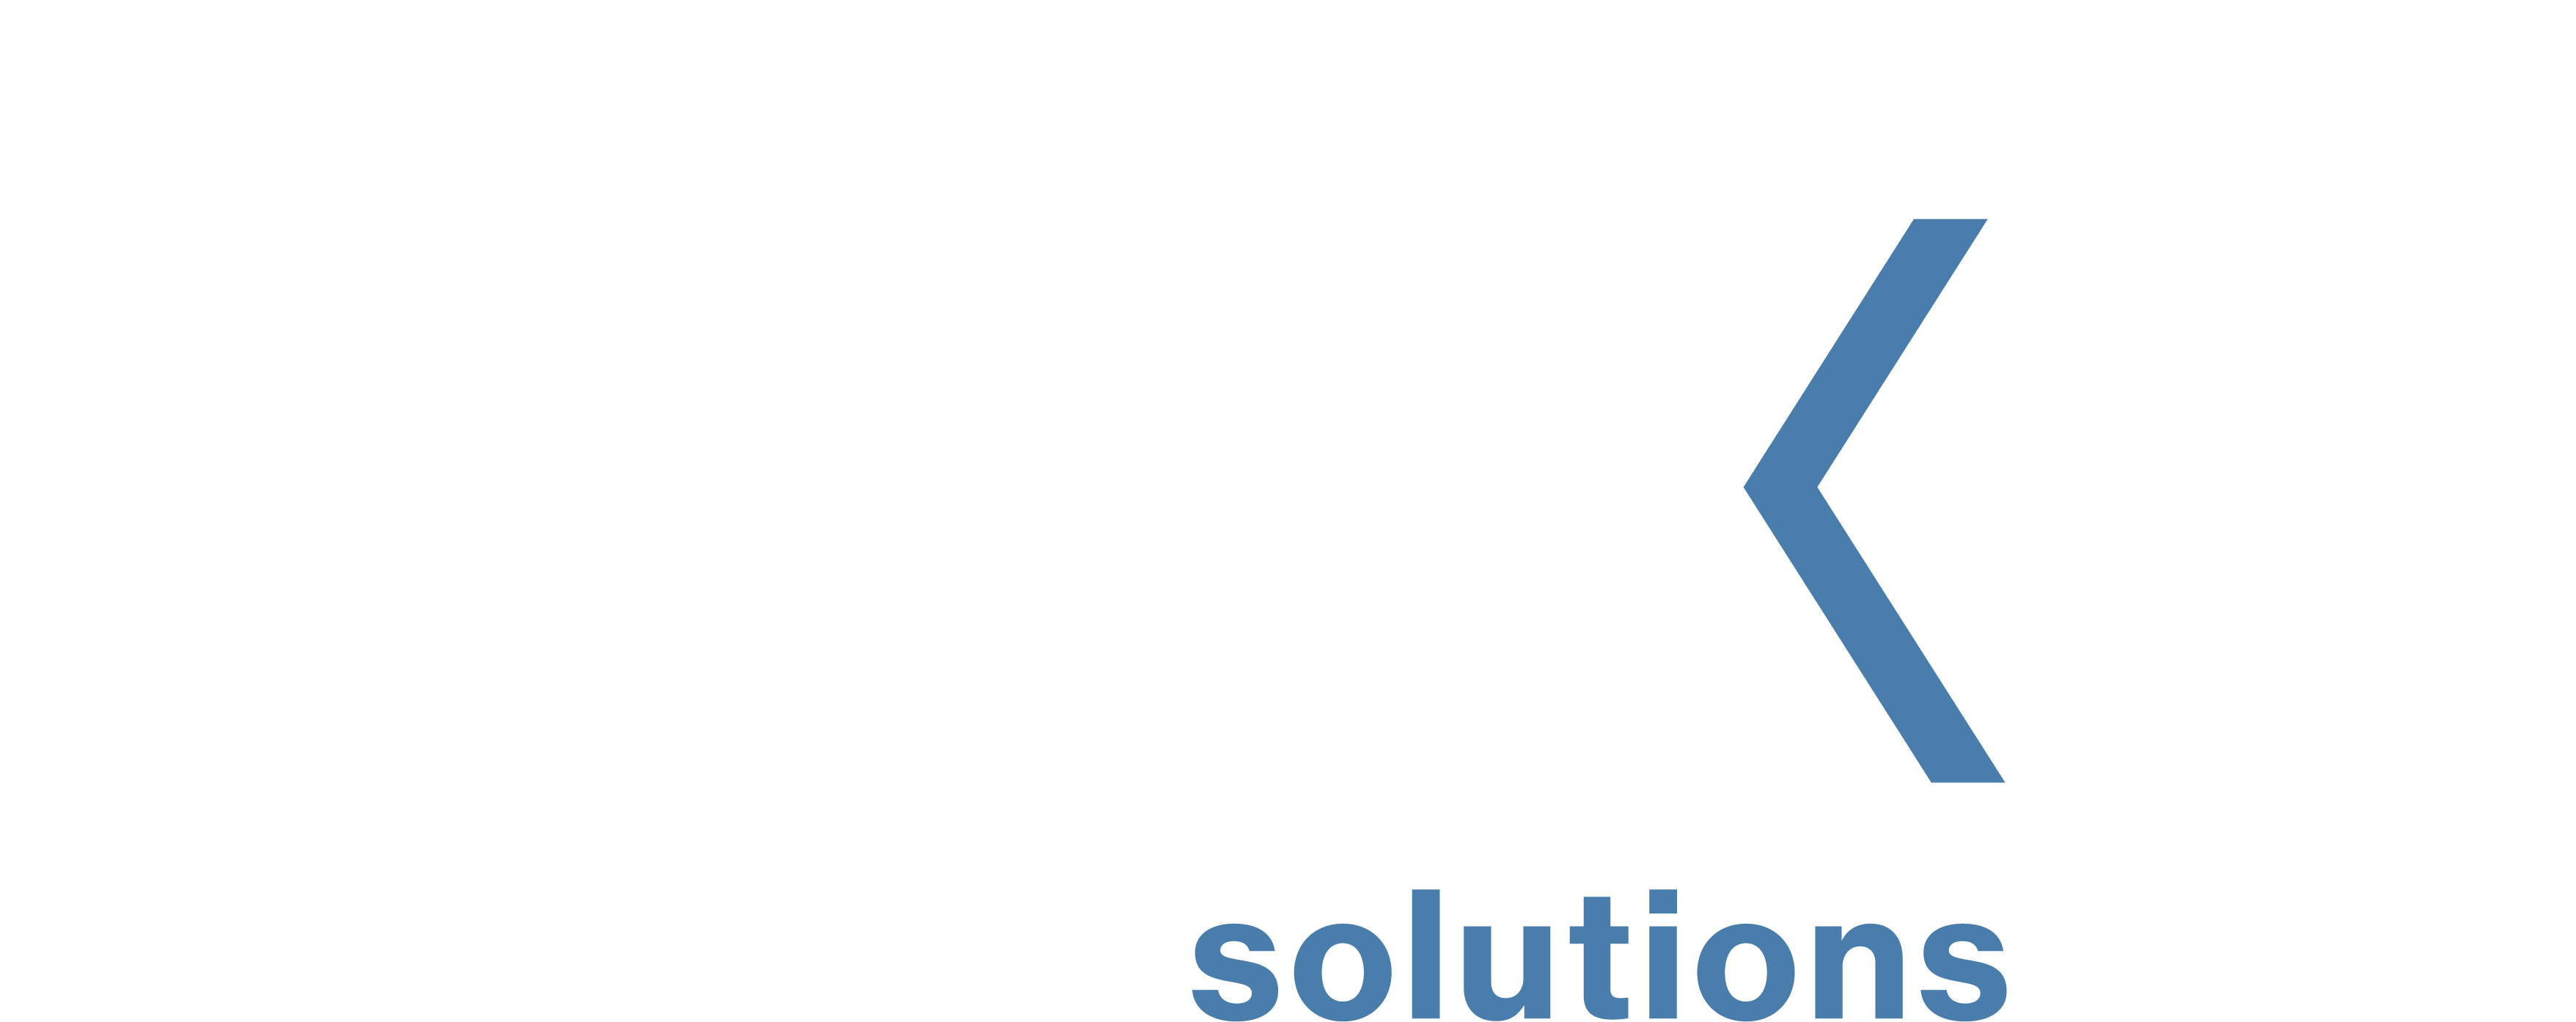 Flexz solutions